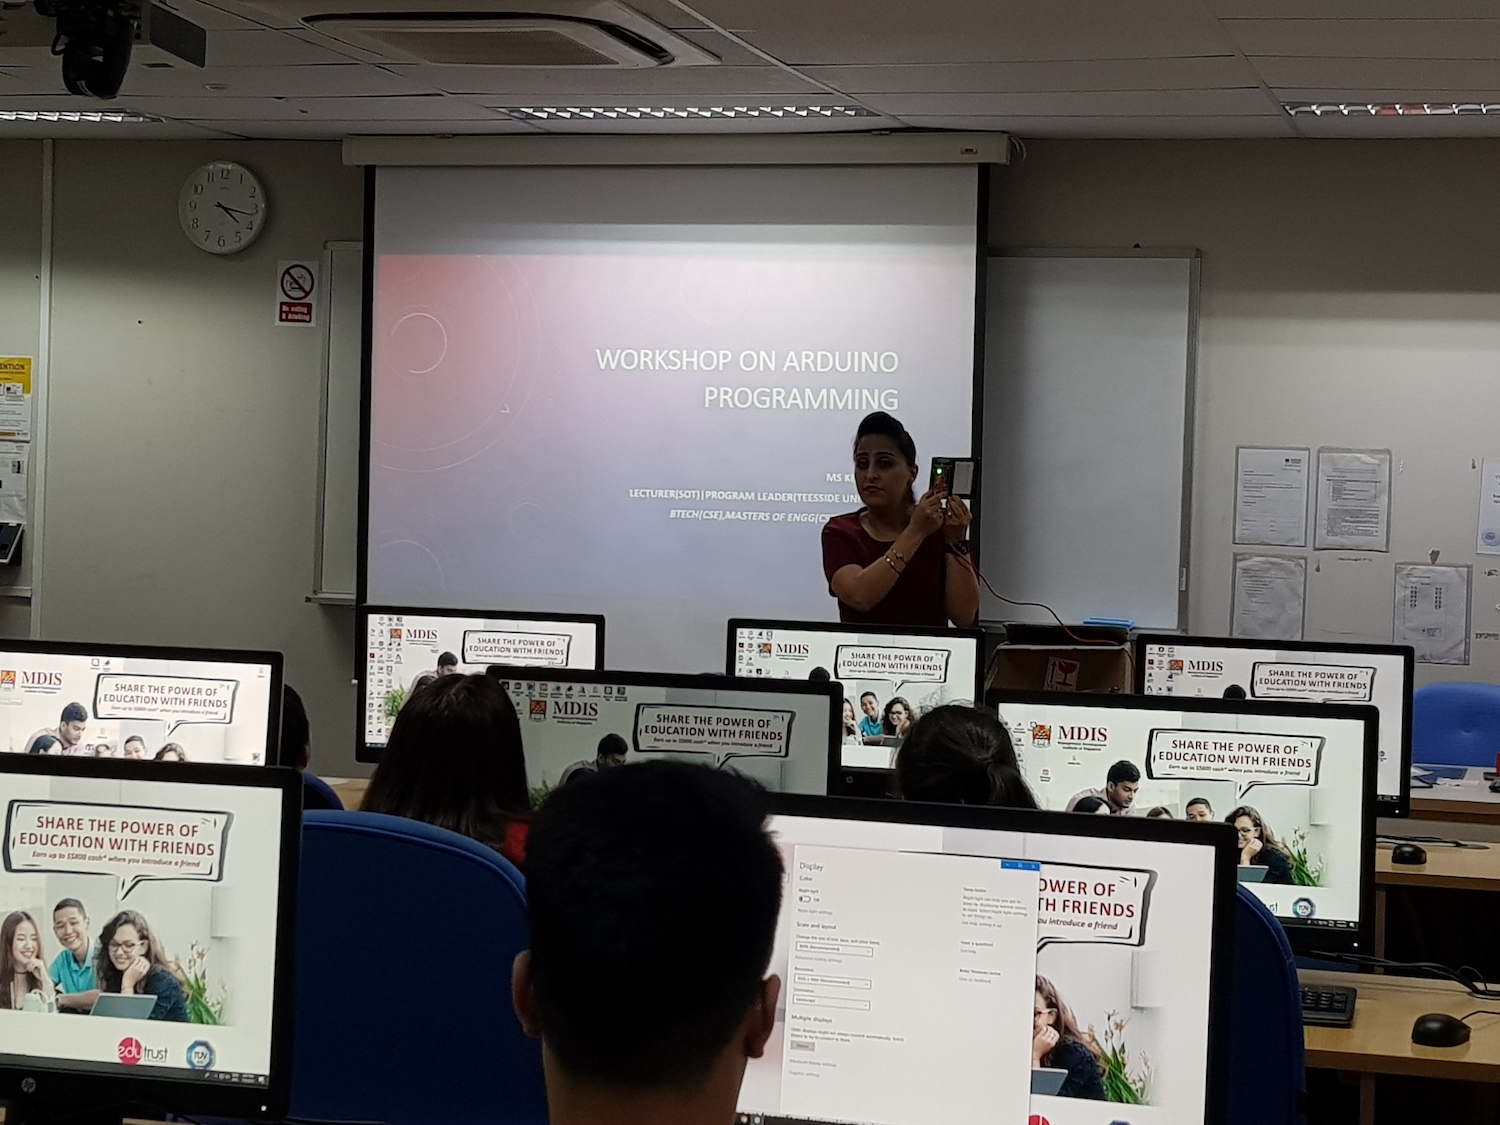 MDIS lecturer shows technical demonstration at a programming workshop.